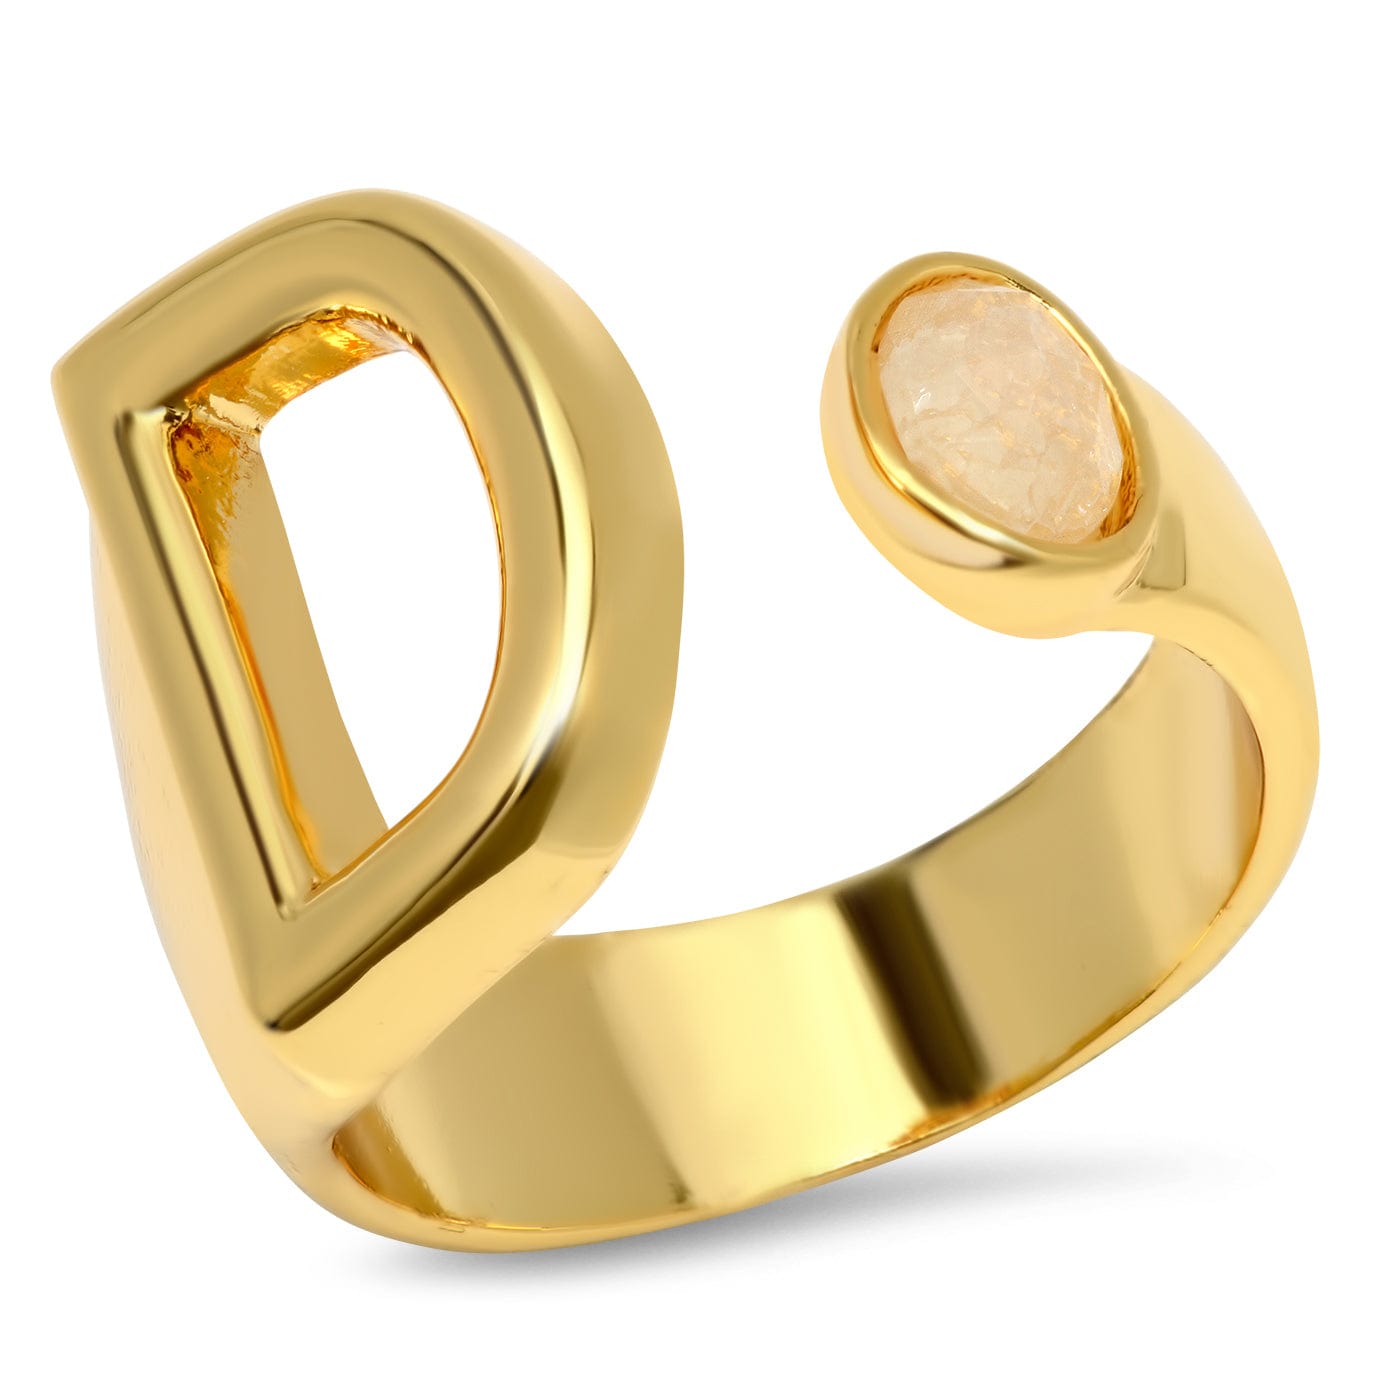 TAI JEWELRY Rings D Initial Wrap Ring